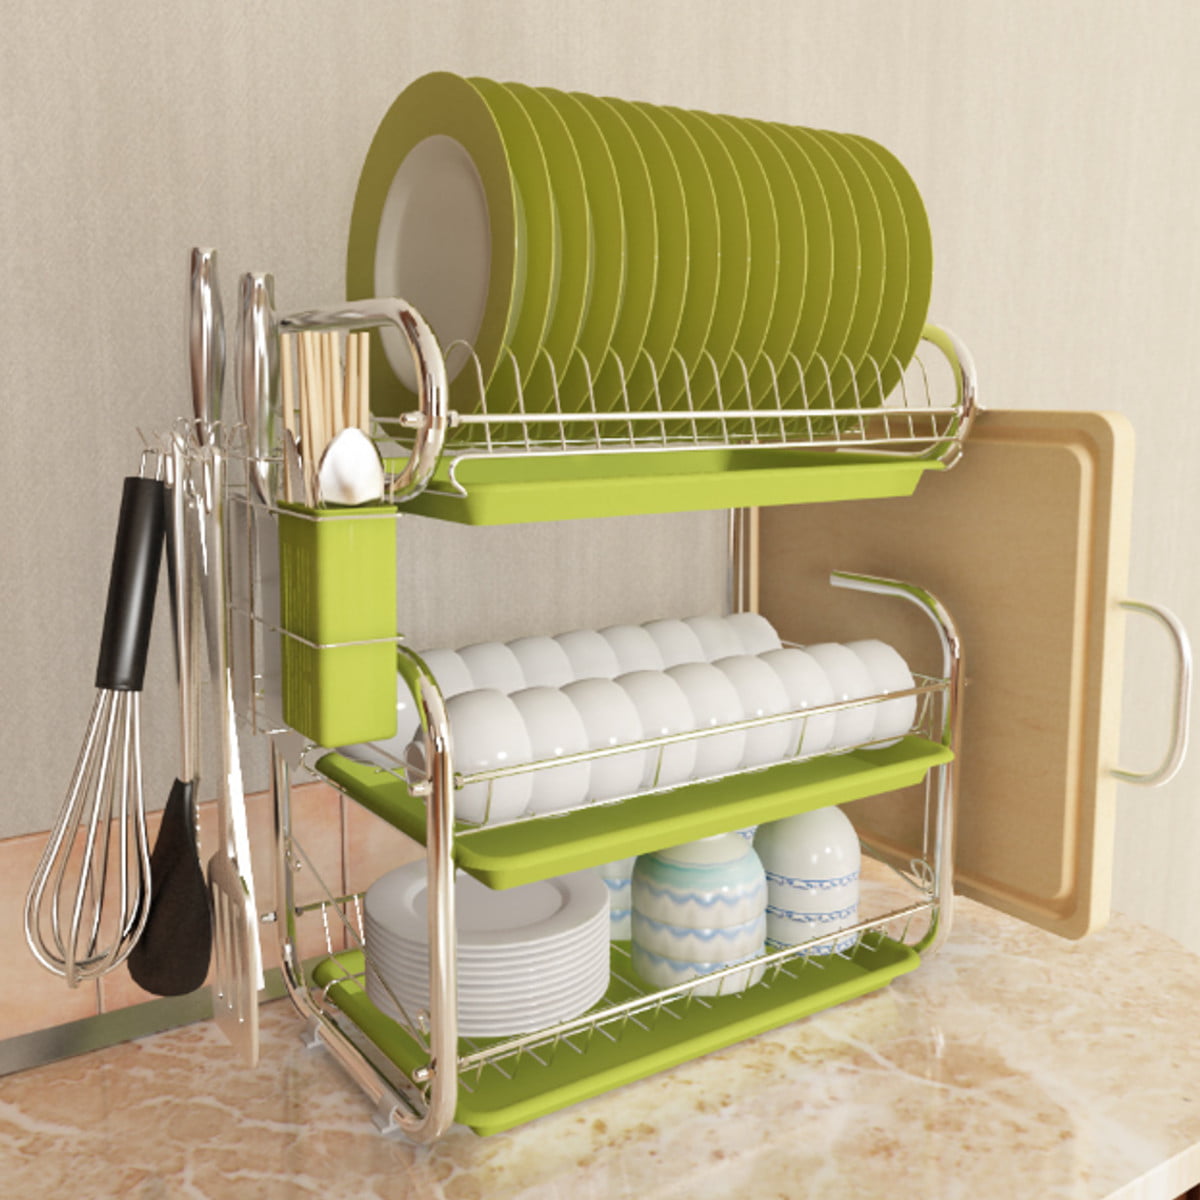 3 Tier Dish Drying Rack w/ 2 Drip Tray Kitchen Organize Cutlery Shelf Drainer US 